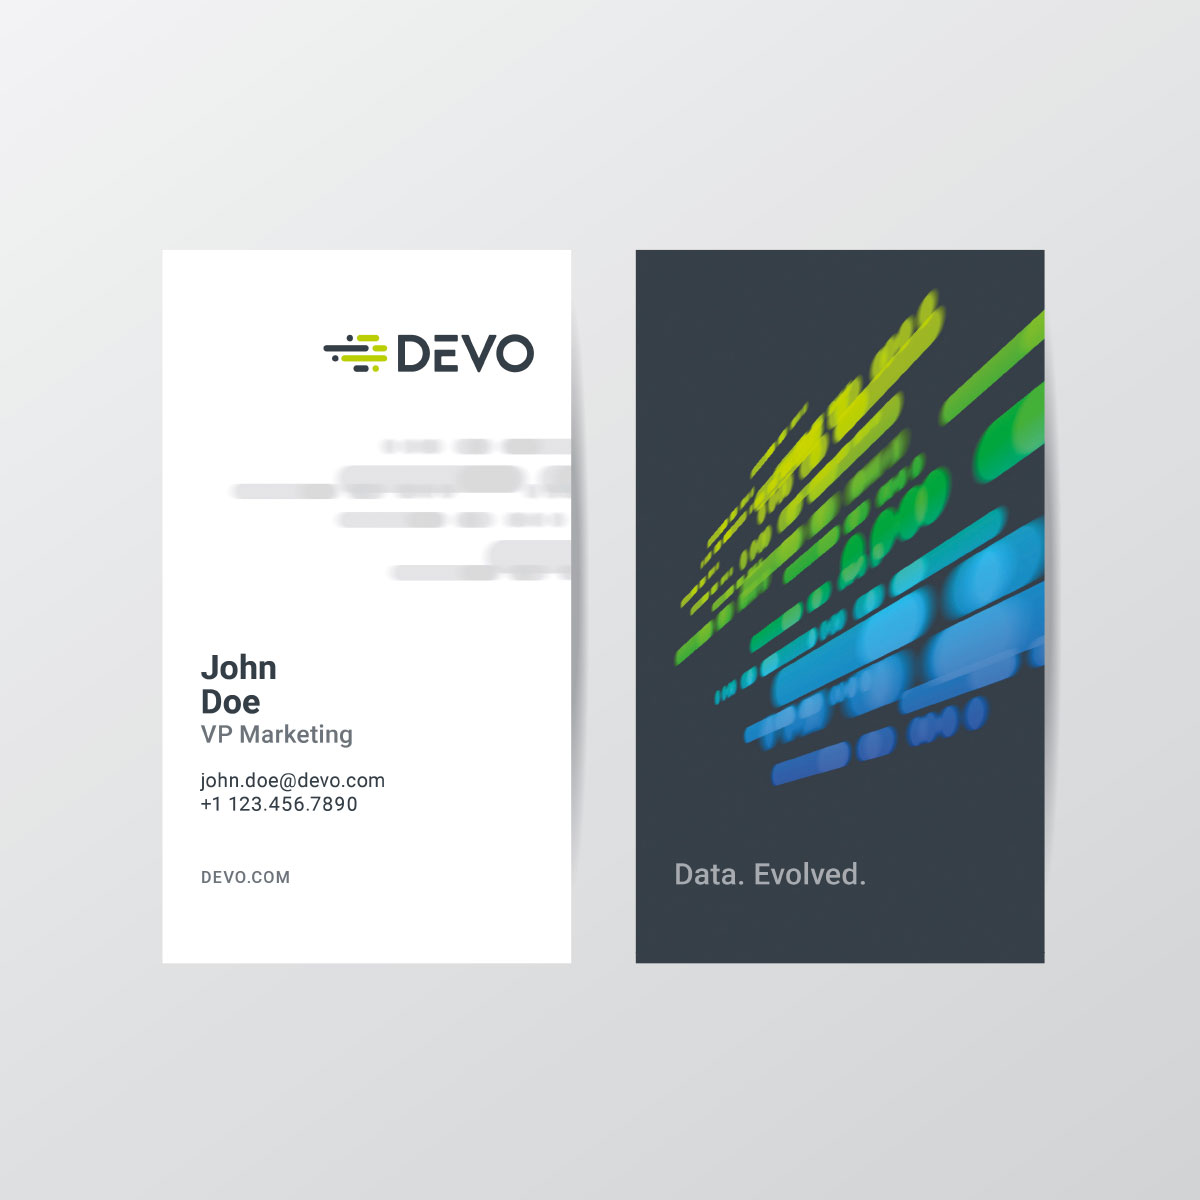 Devo, Inc. Brand Identity – Business Card Design